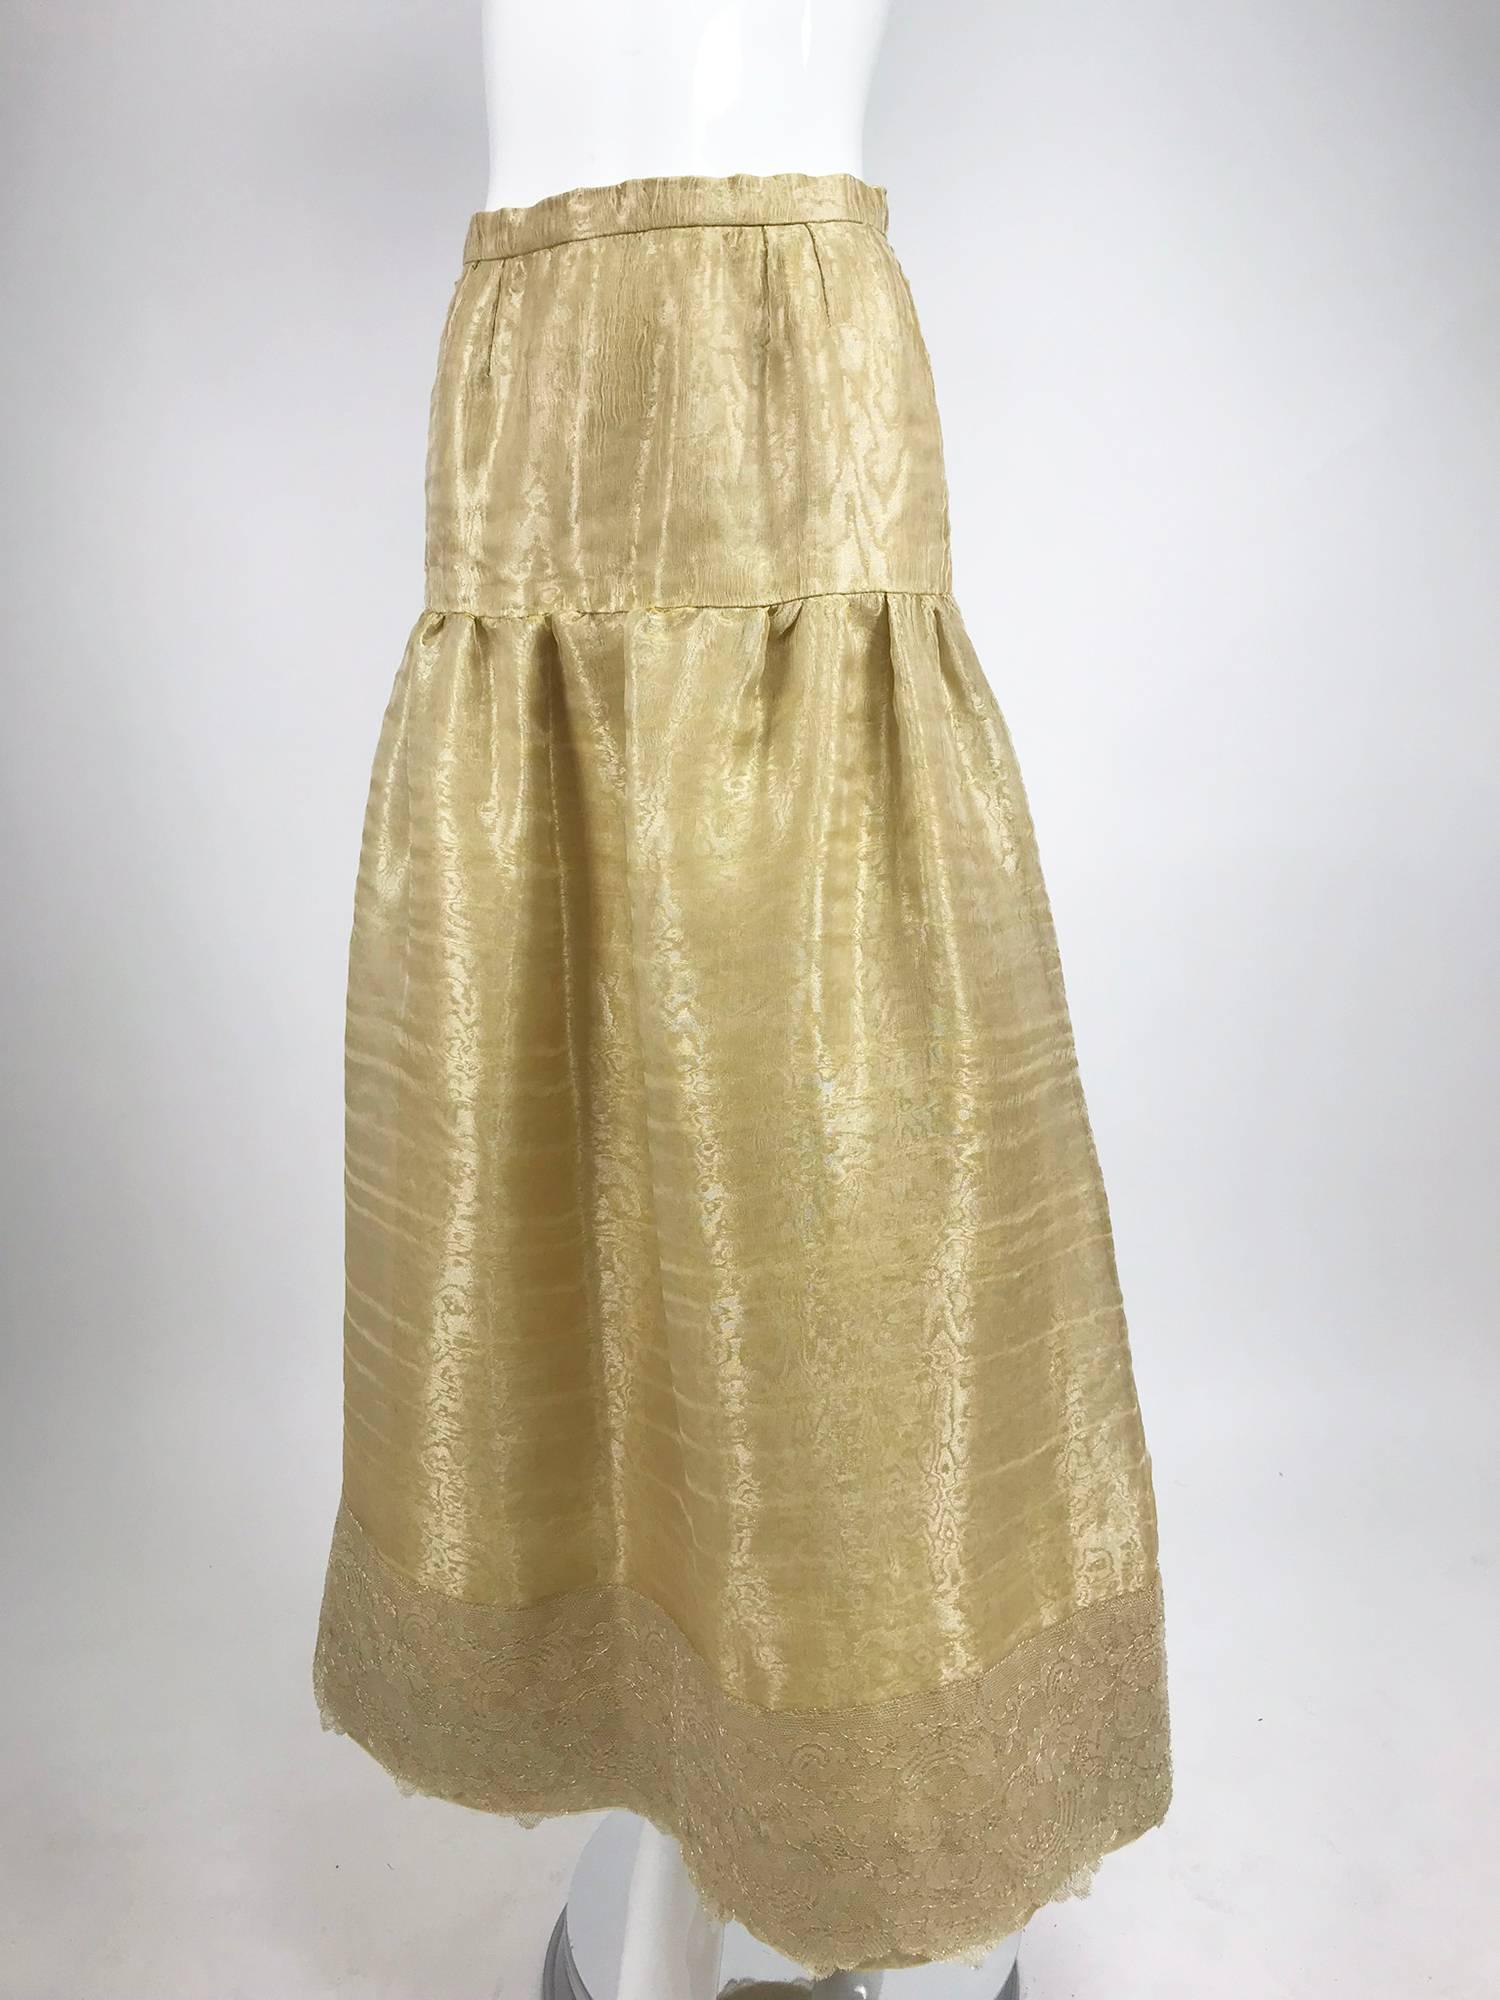 Women's Emanuel Ungaro Studio Couture gold spun silk organza evening skirt